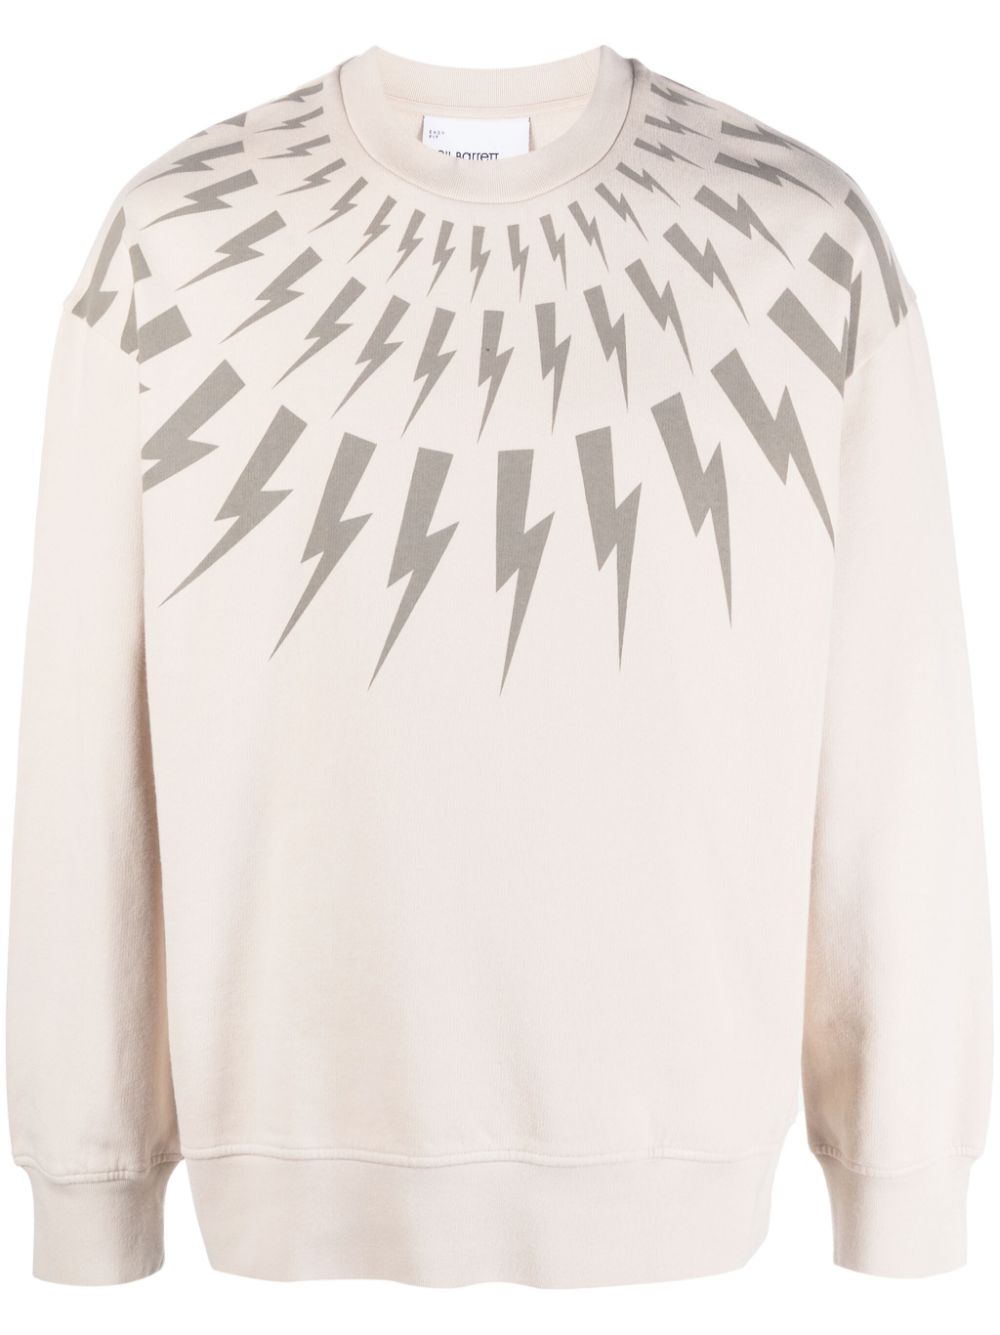 Thunderbolt-print cotton sweatshirt